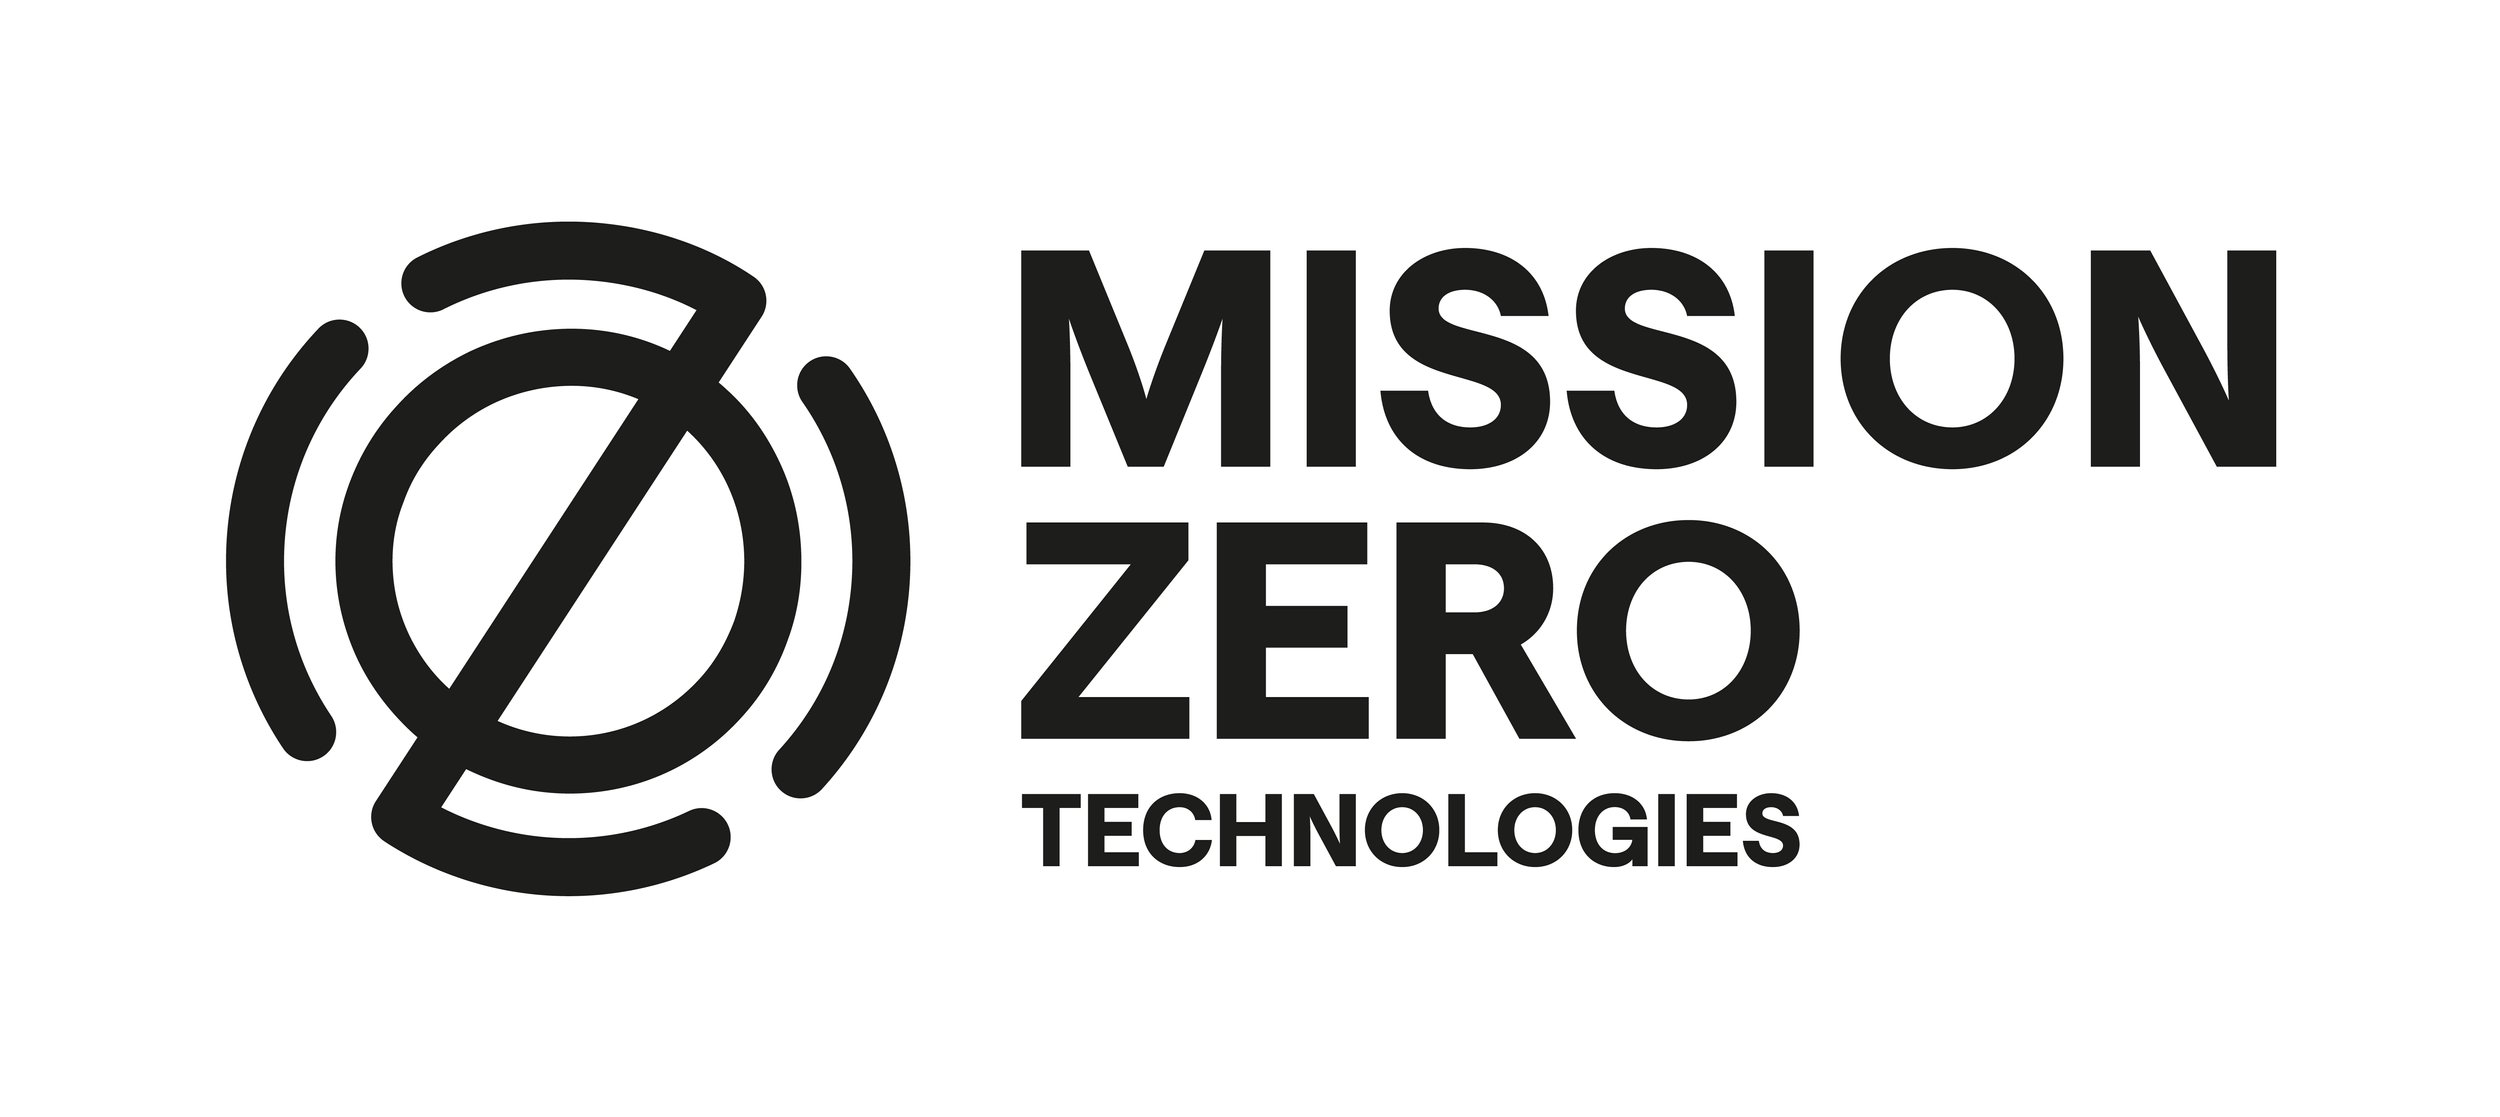 Mission Zero Technologies - Home & News